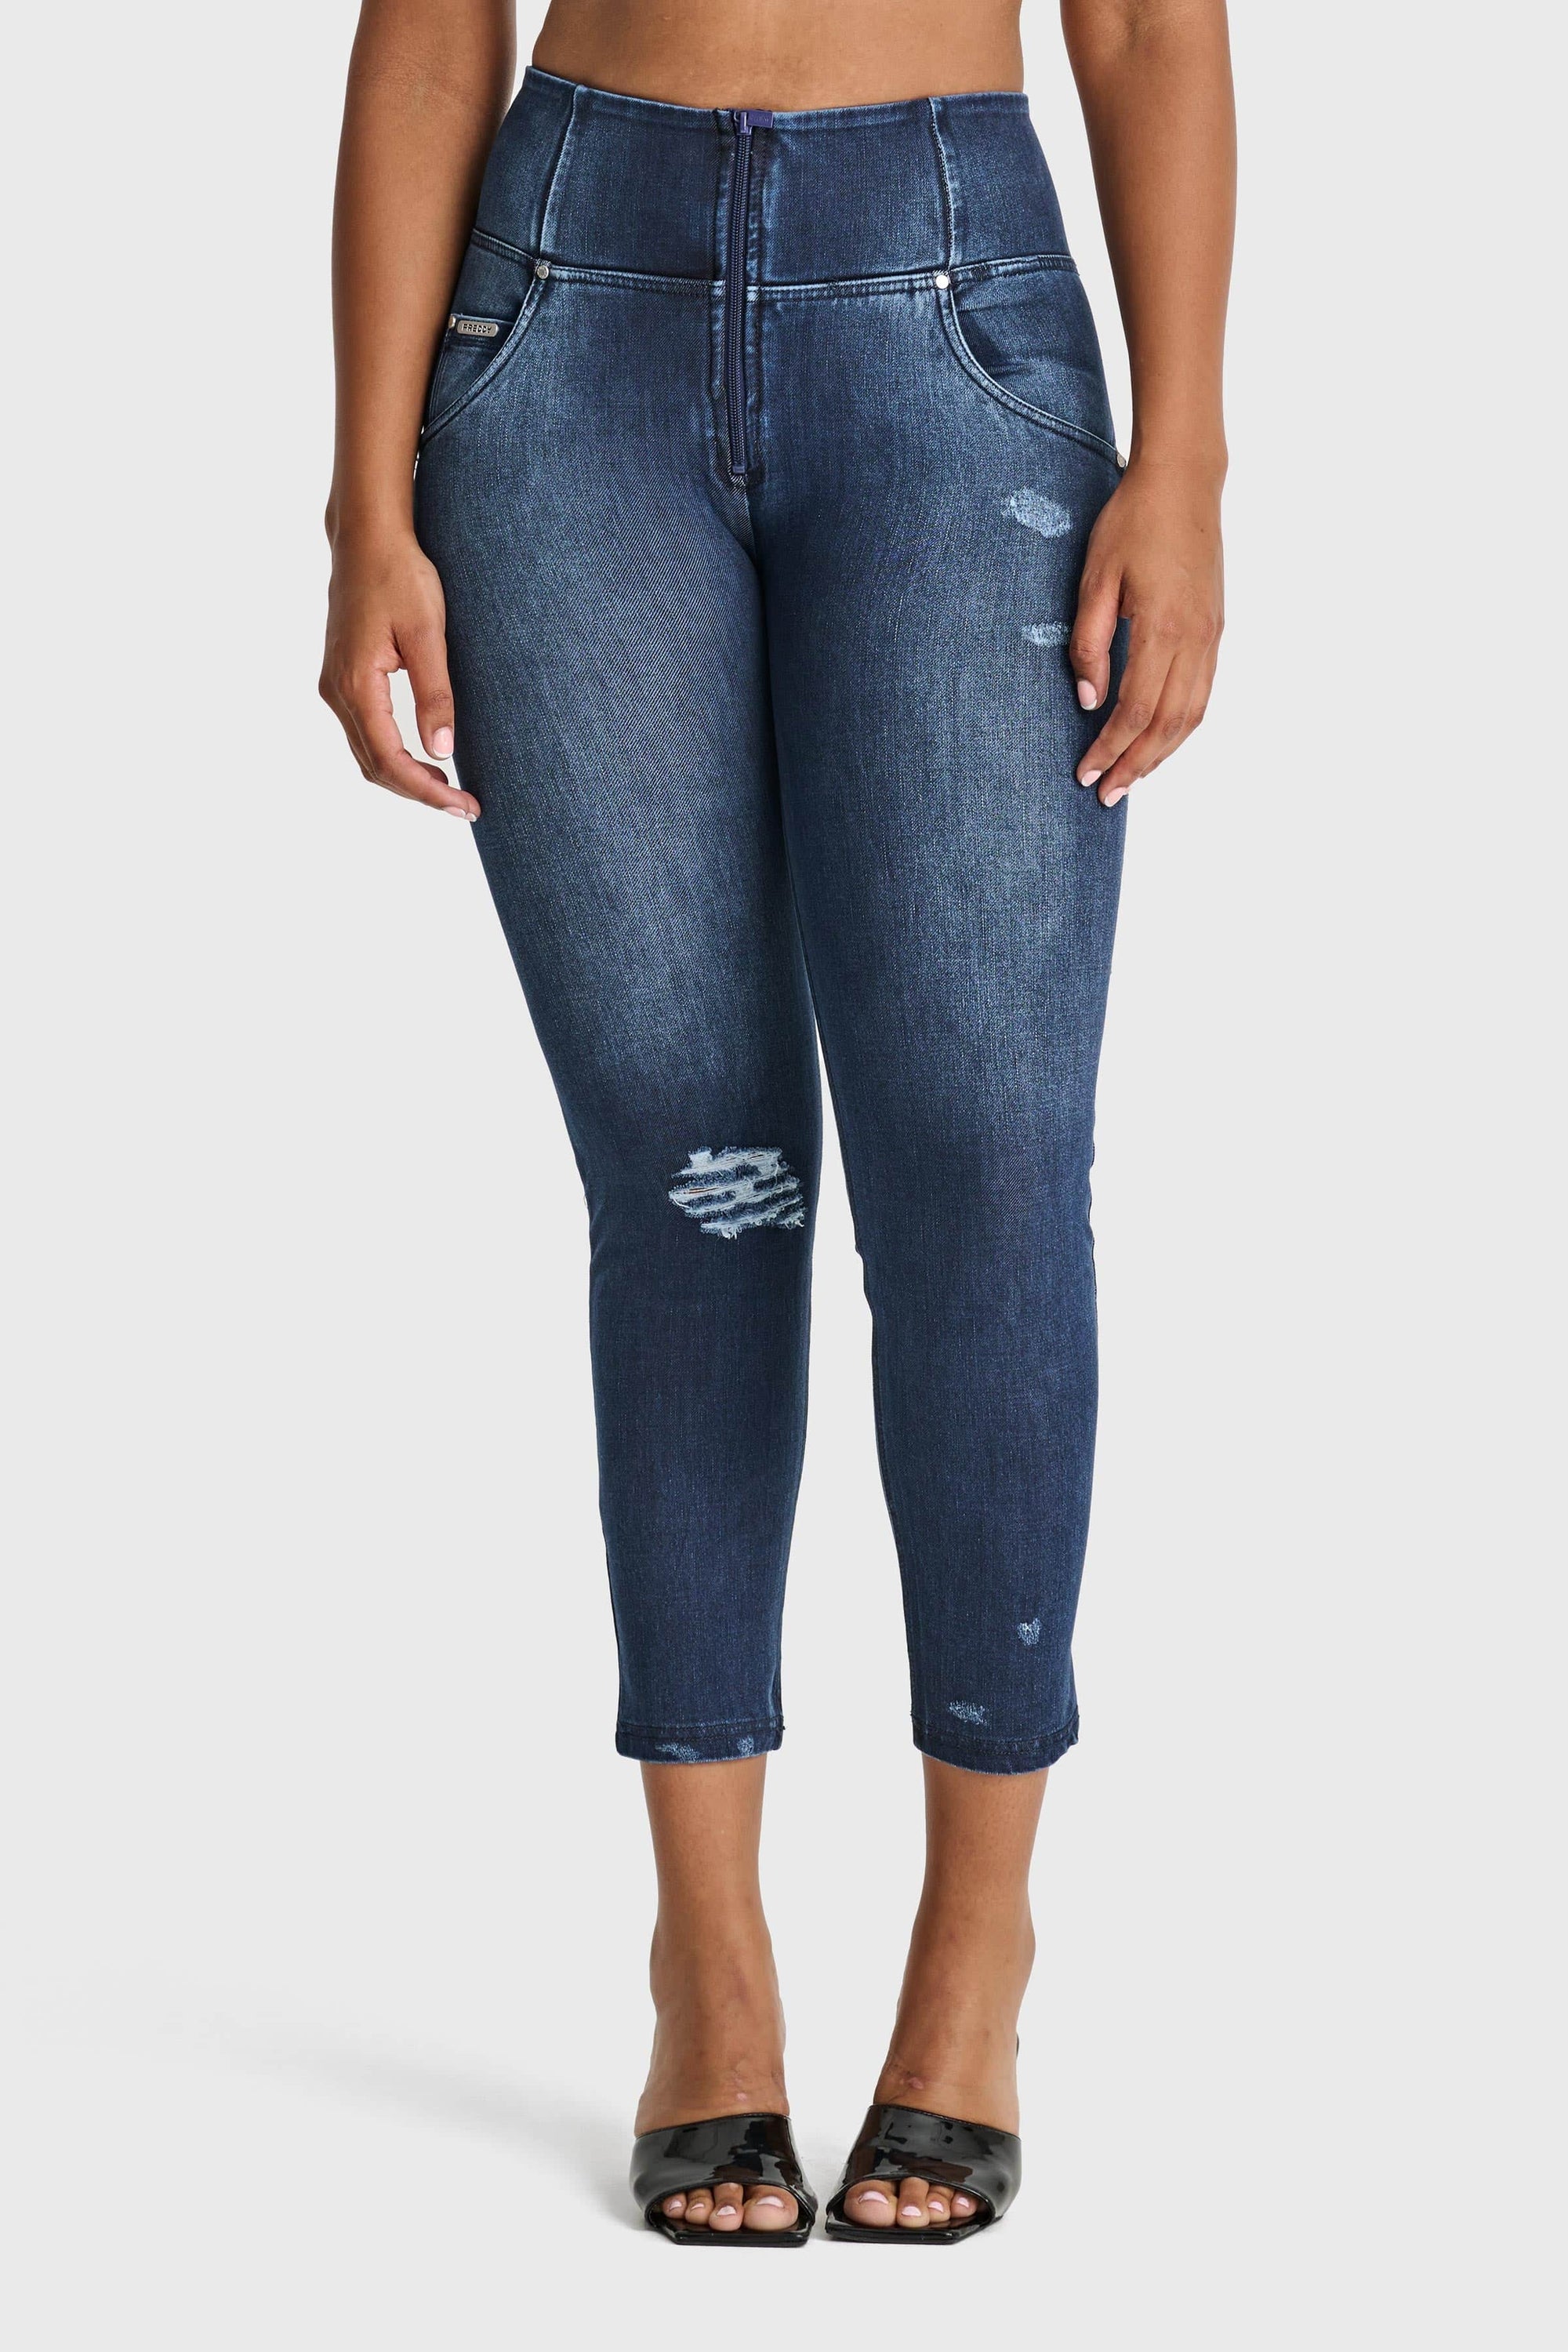 WR.UP® Snug Distressed Jeans - High Waisted - Petite Length - Dark Blue + Blue Stitching 8